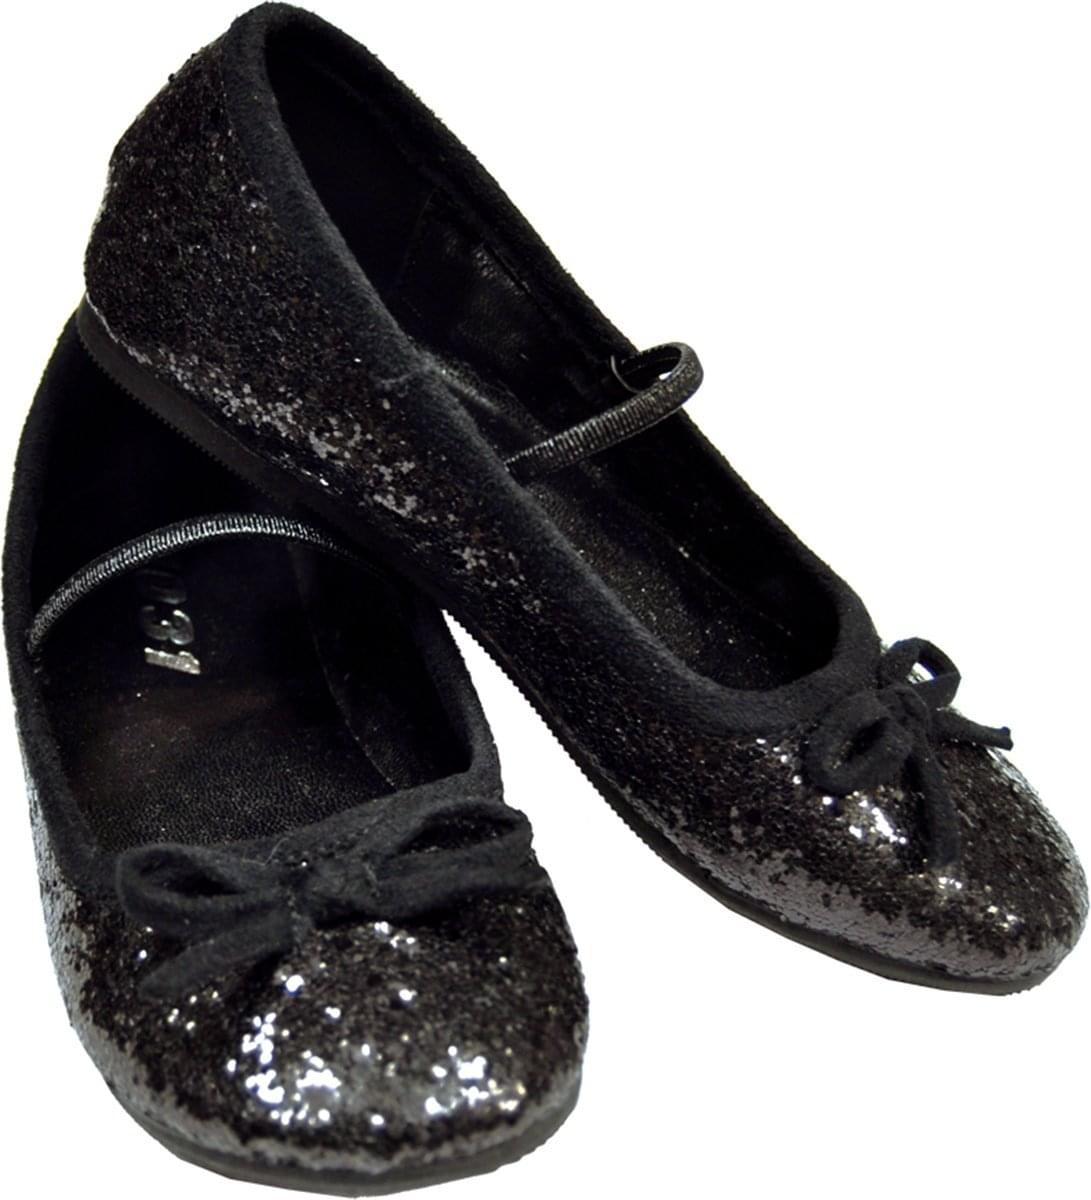 Flat Glitter Ballet Child Costume Shoes, Black